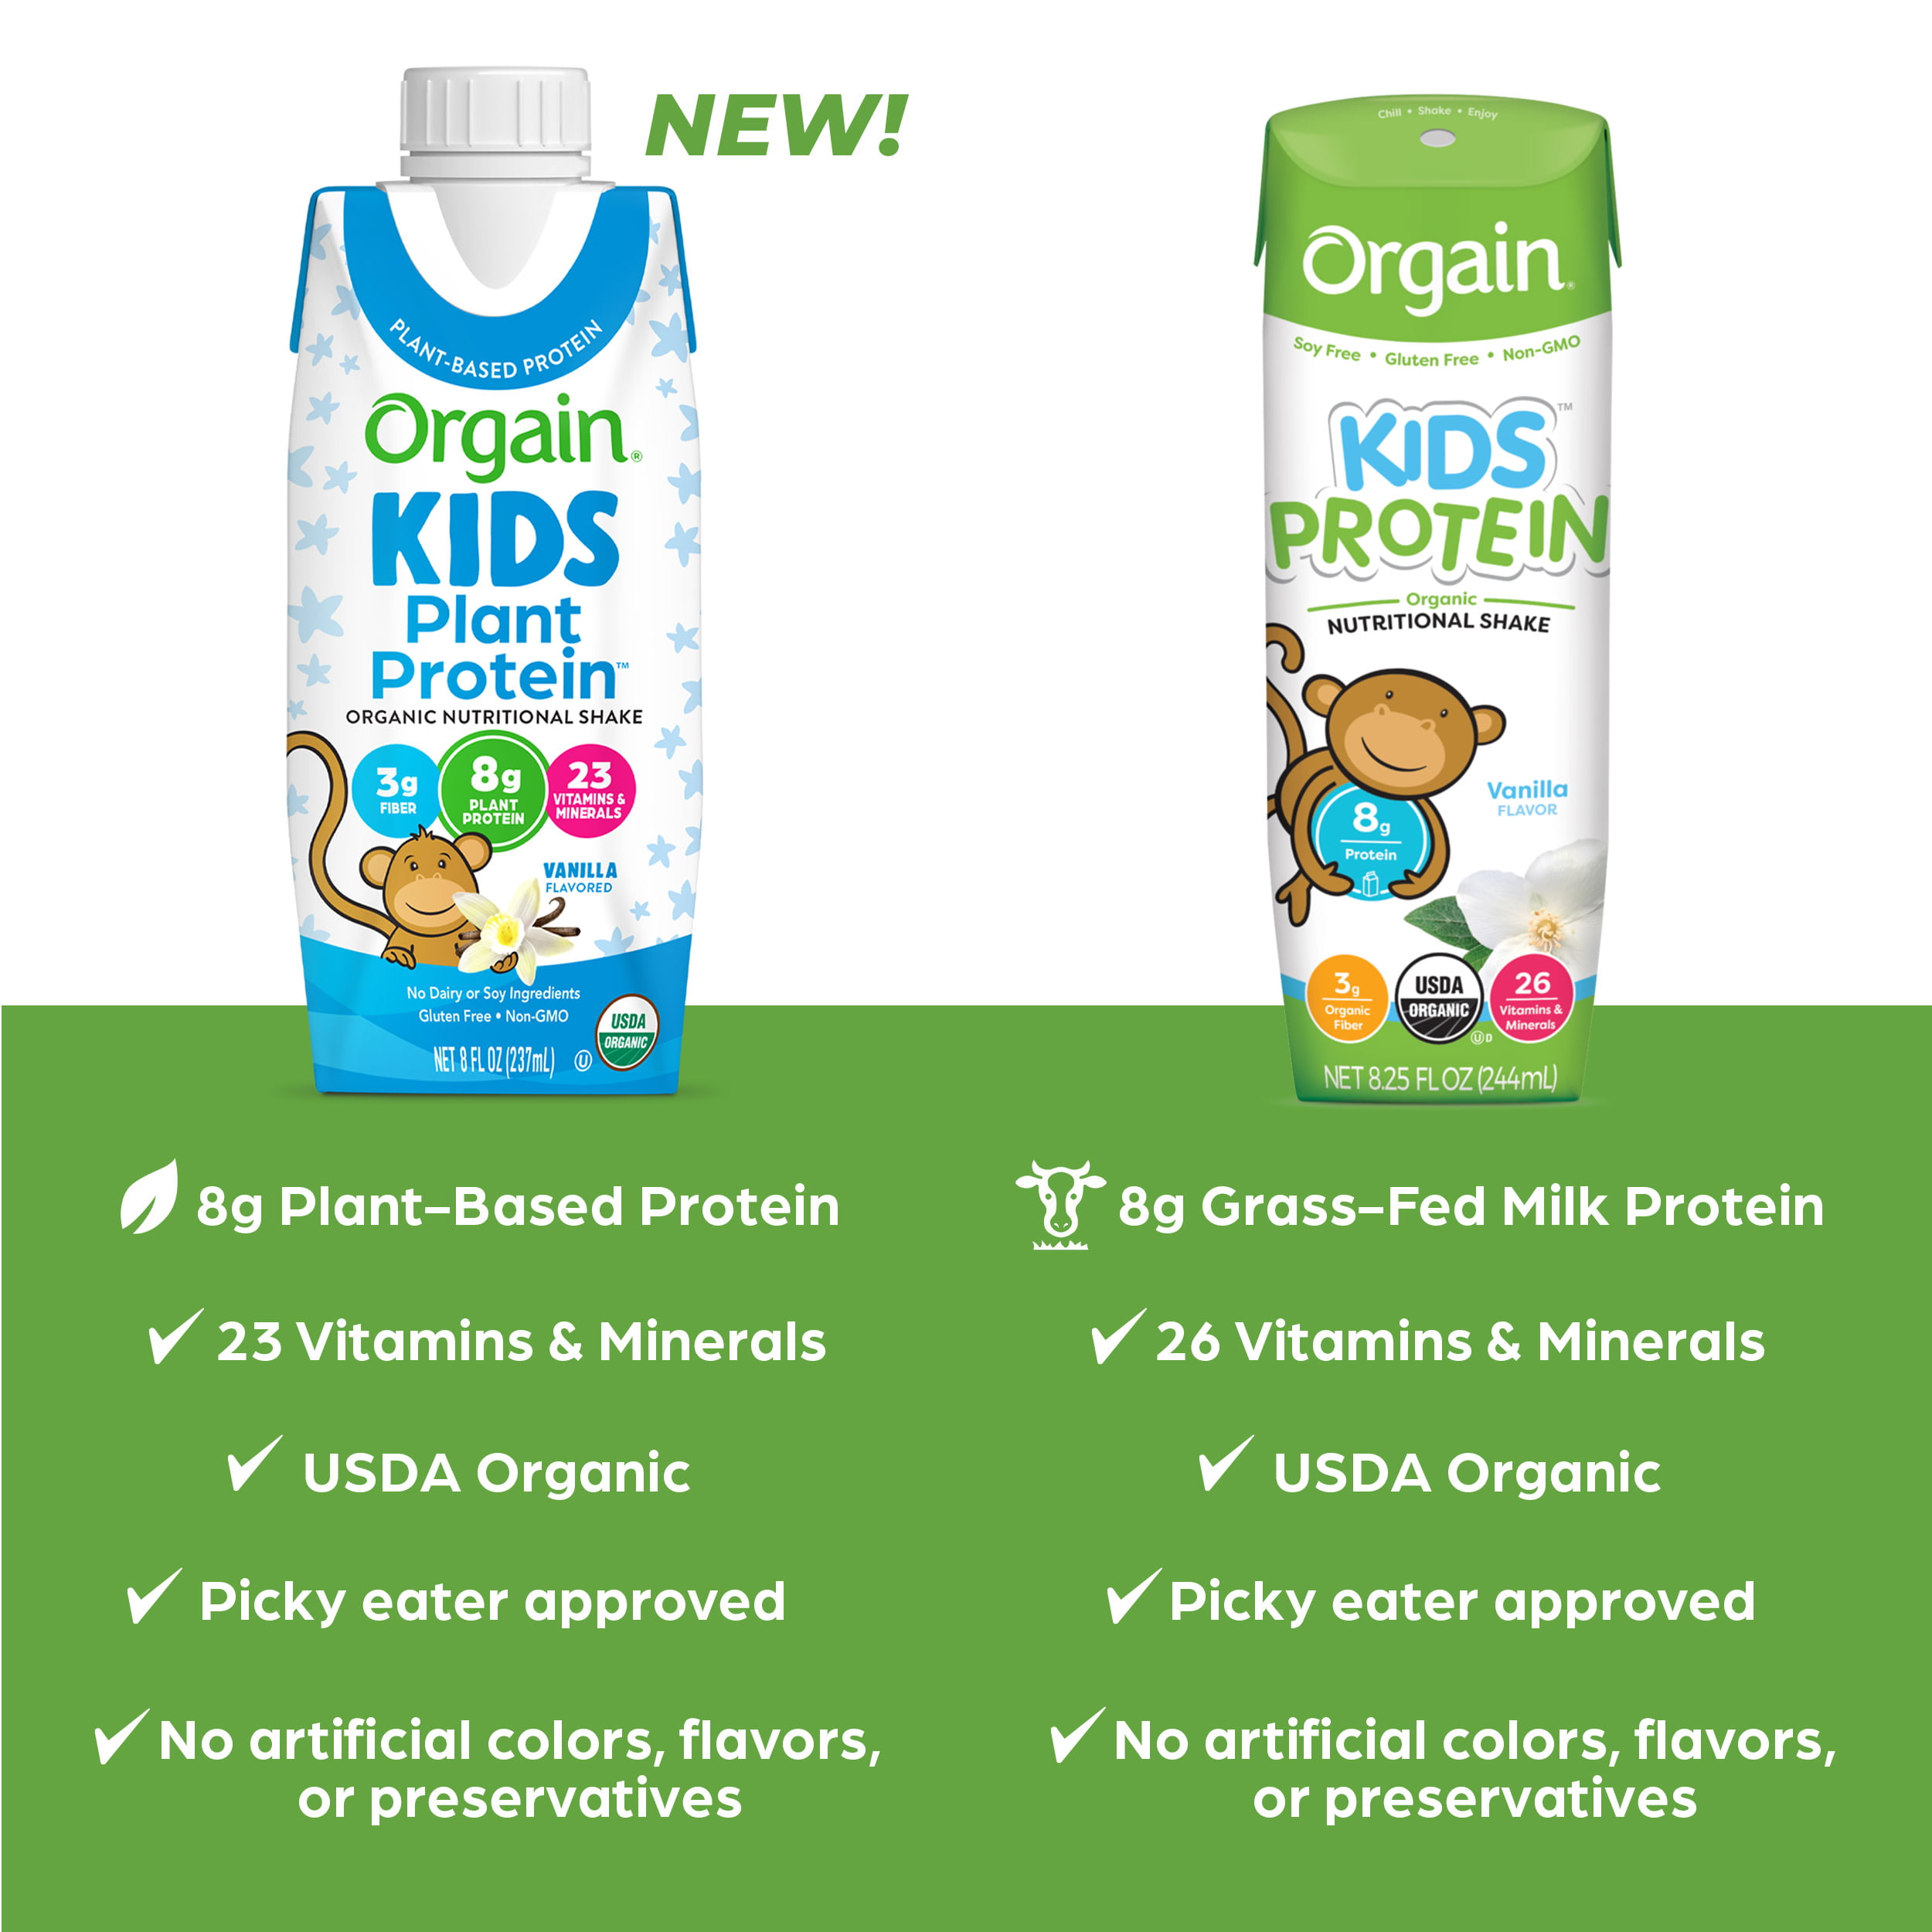 Orgain Kids Plant Protein Nutritional Shake Pediatric Oral